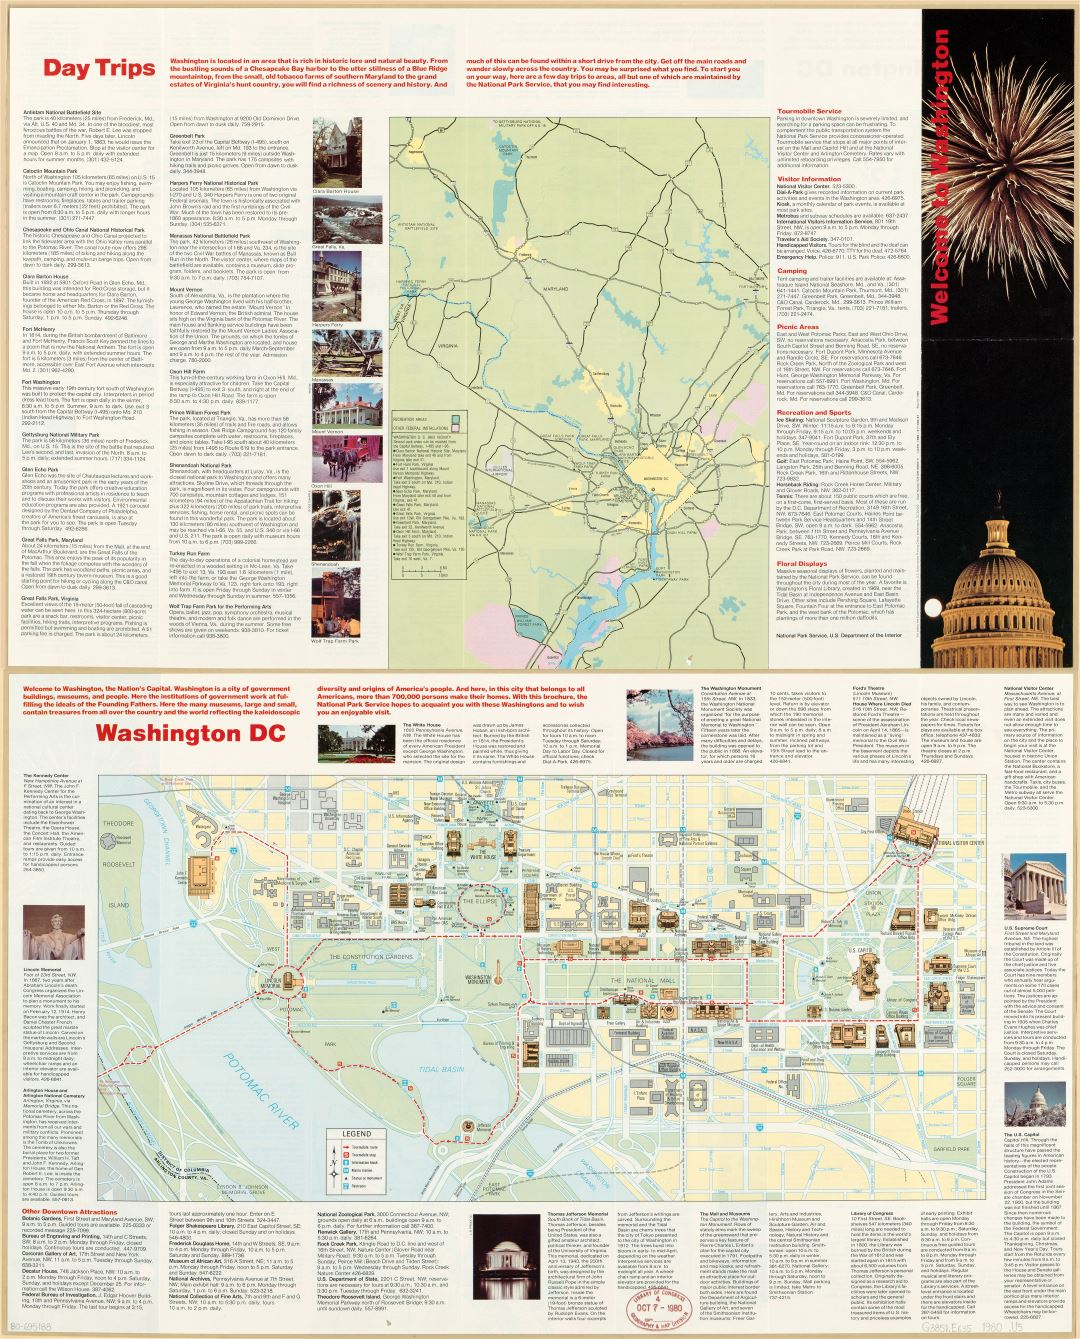 Large scale tourist map of Washington D.C. - 1980